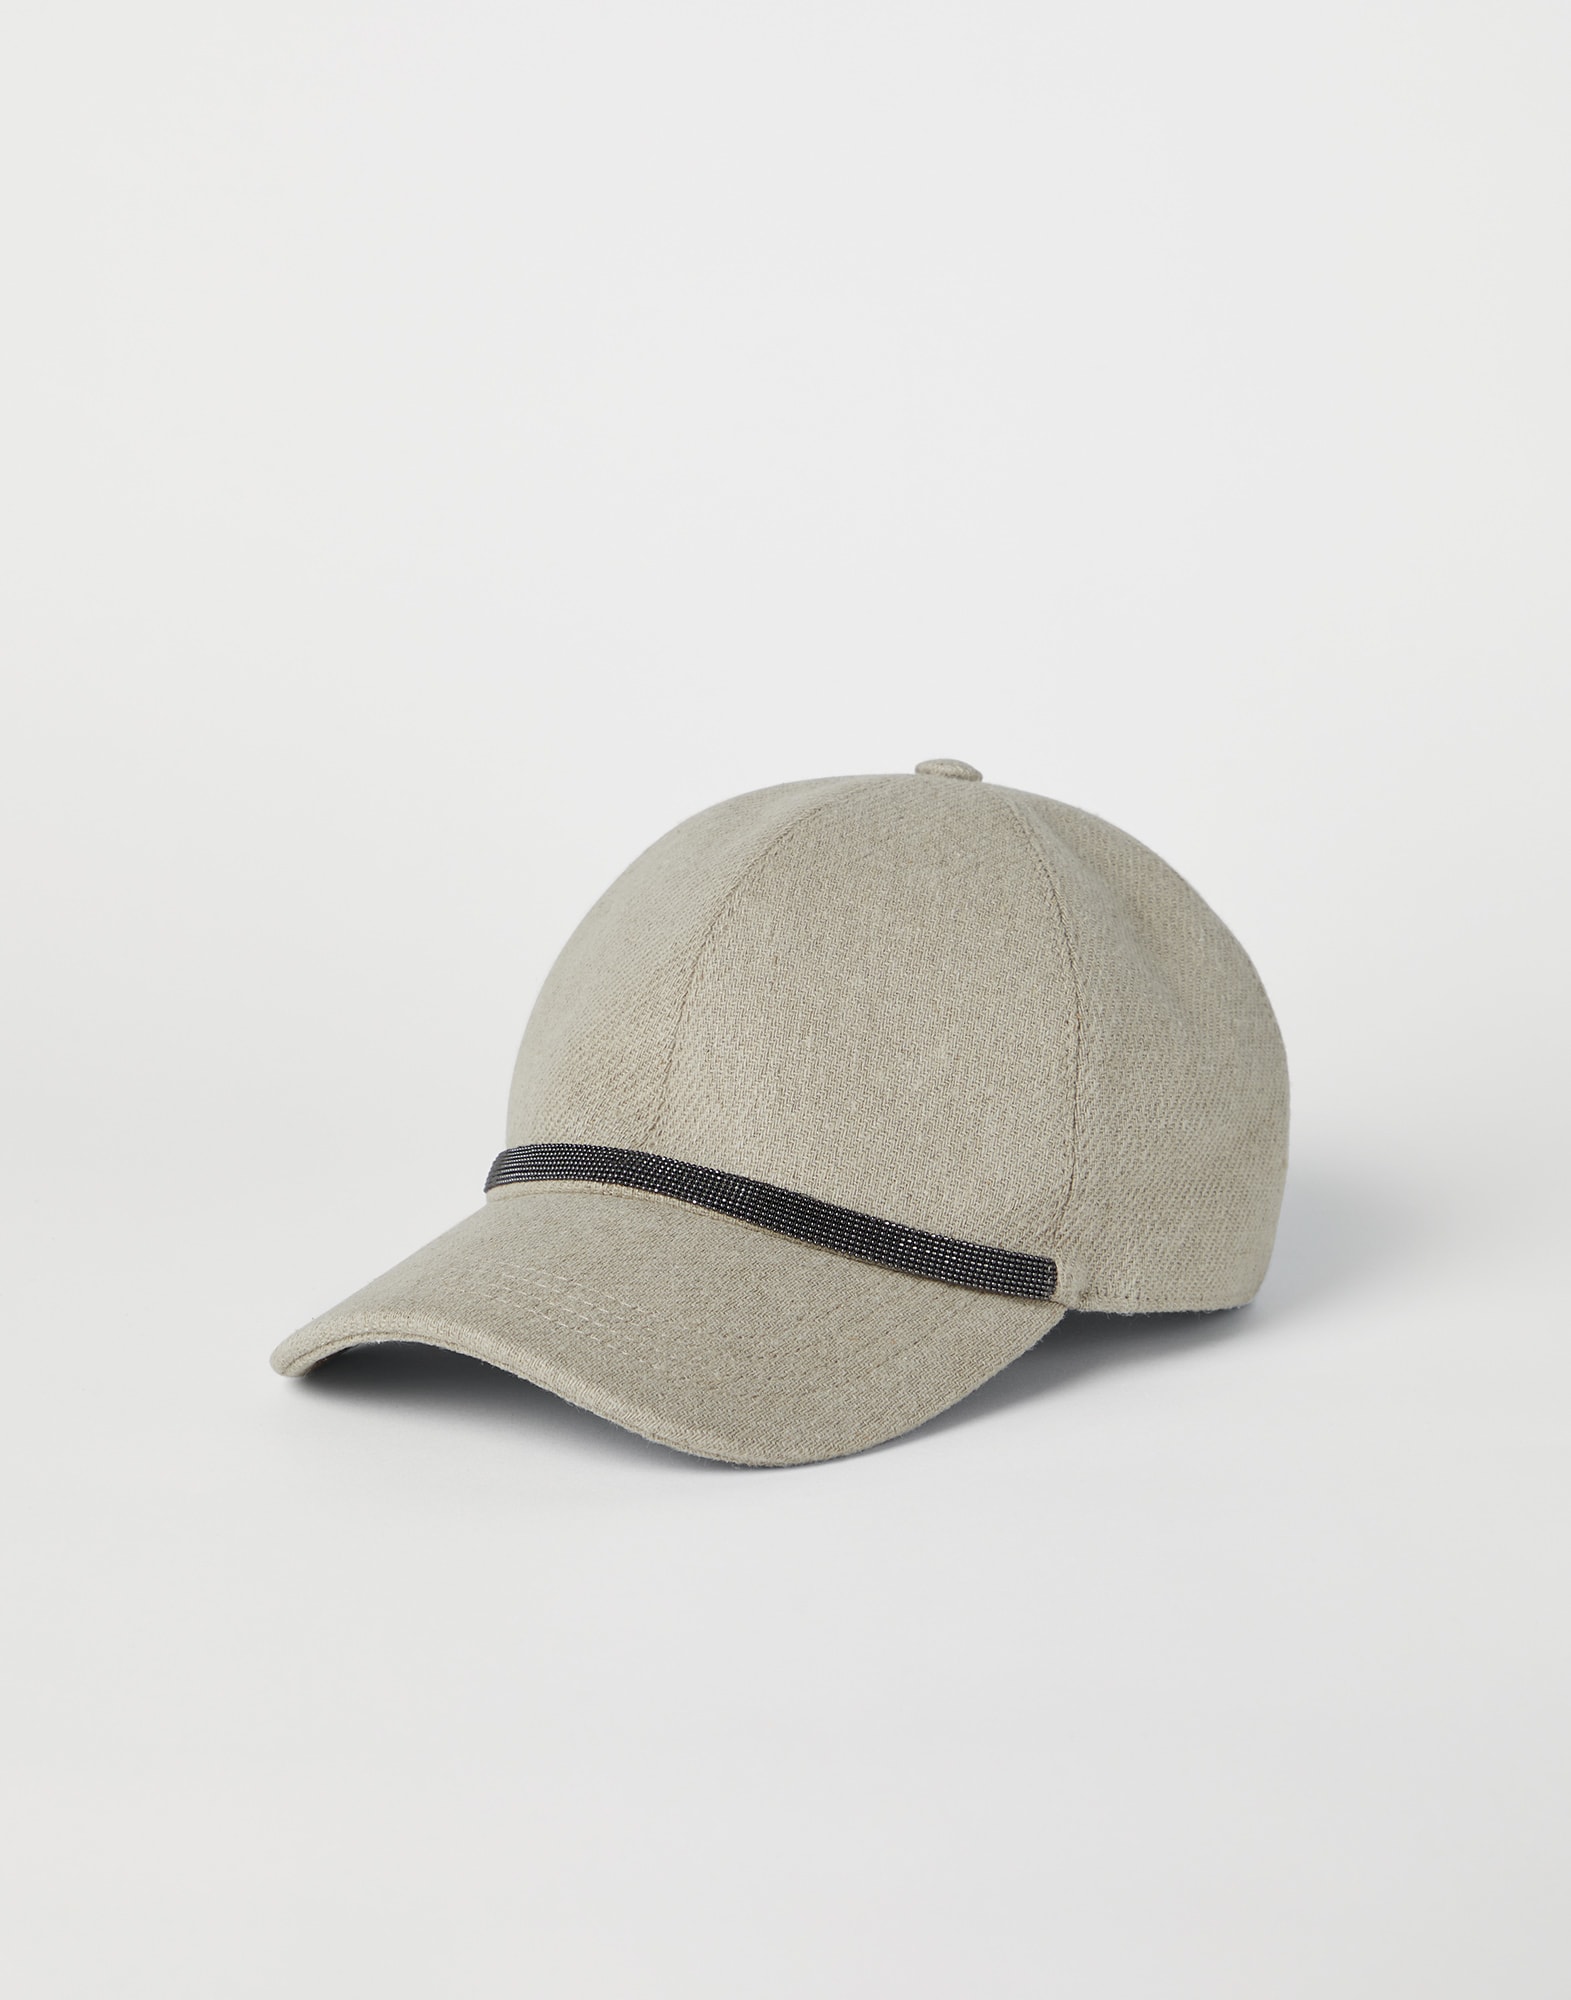 Women's hats: beanies, fedoras, baseball caps